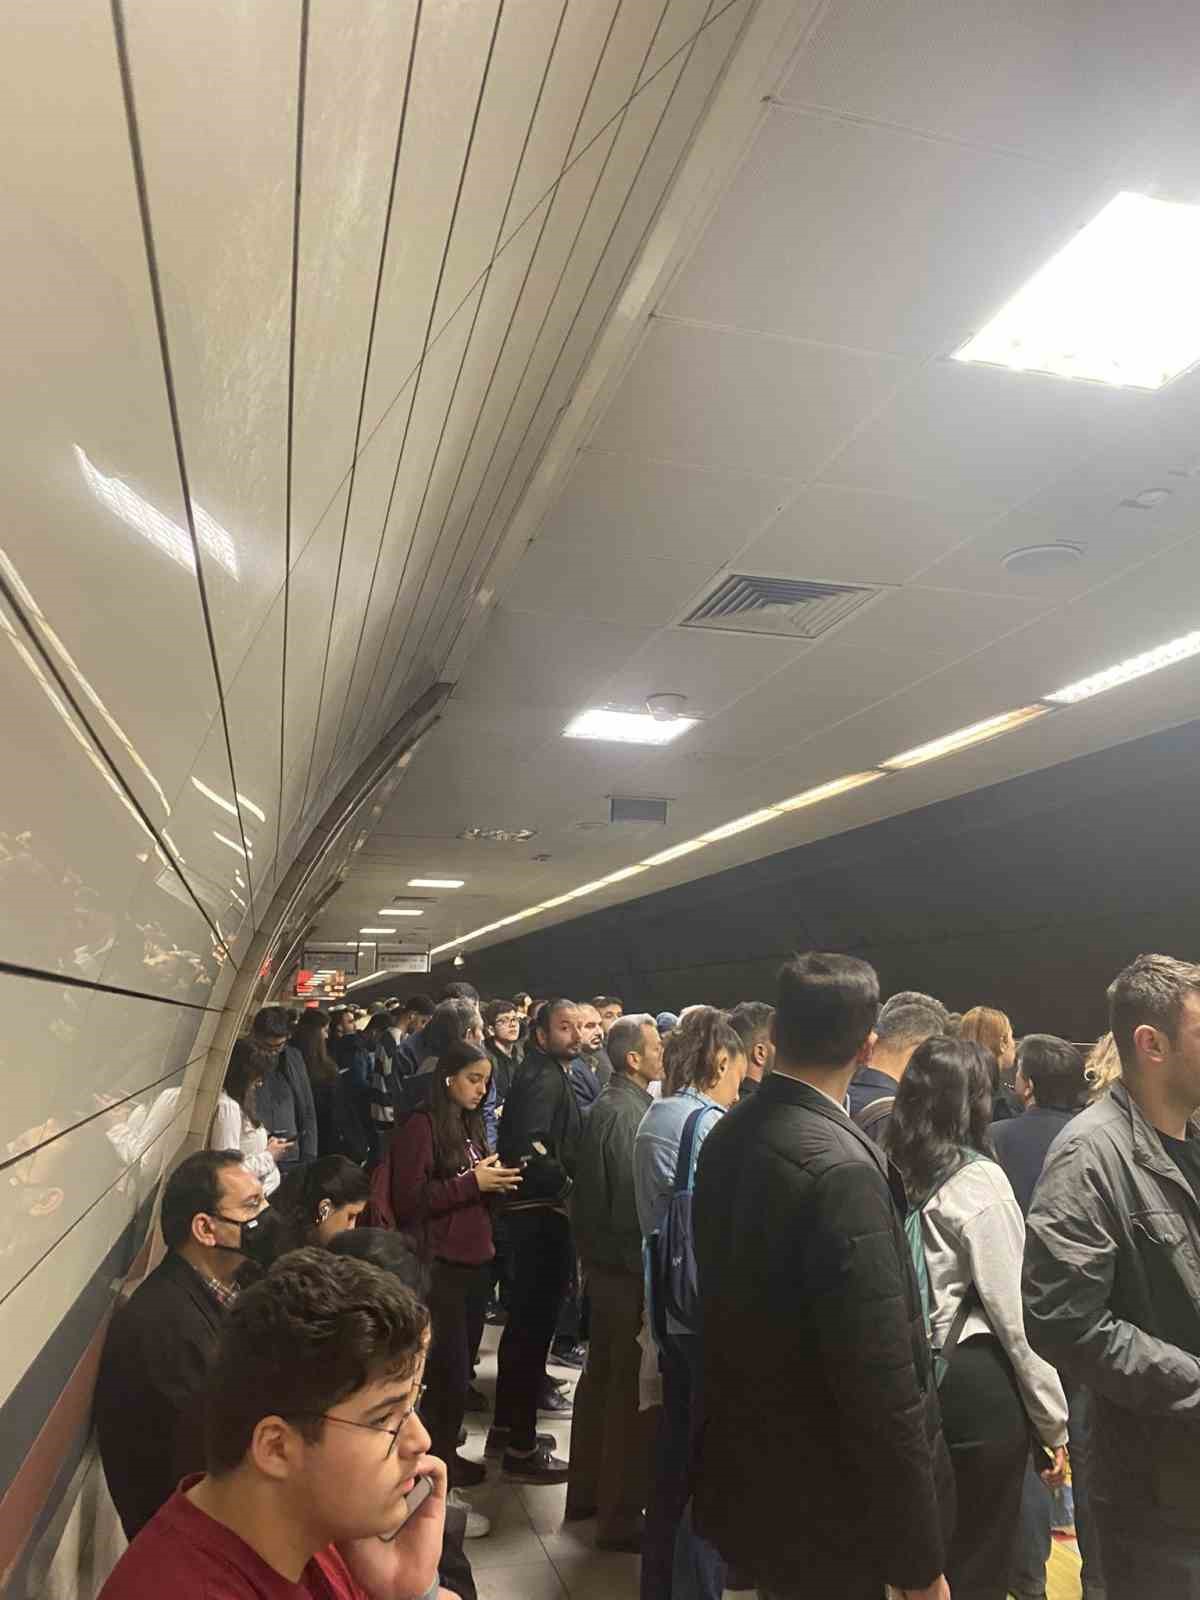 uskudar samandira metro hattinda ariza nedeniyle seferler durdu 2 OSjWeP9r